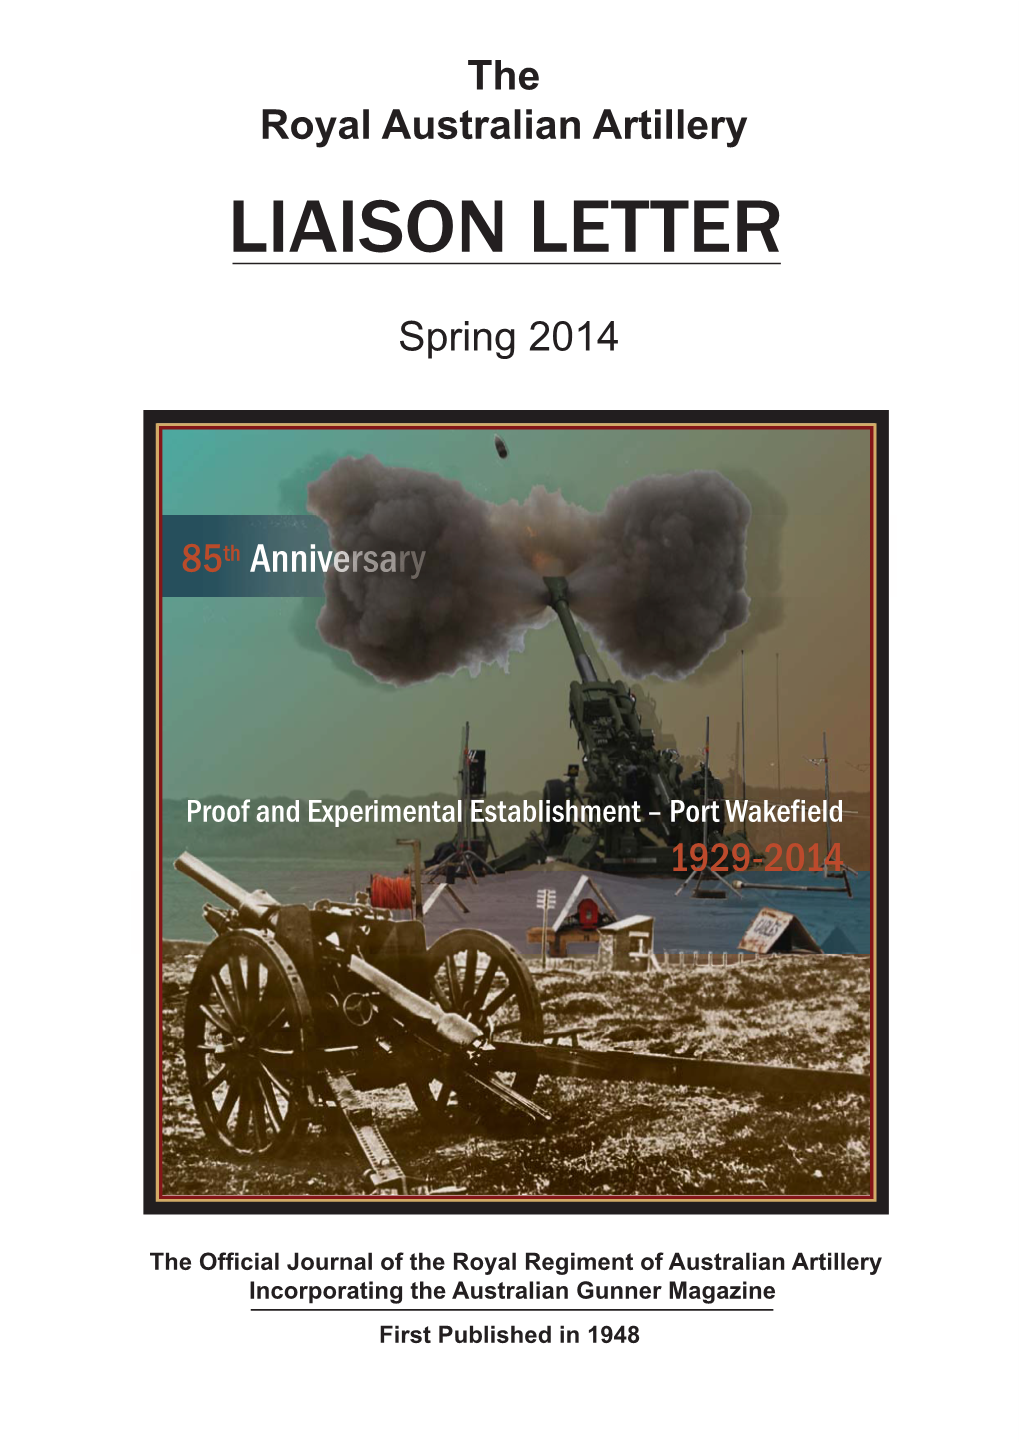 RAA Liaison Letter Spring 2014